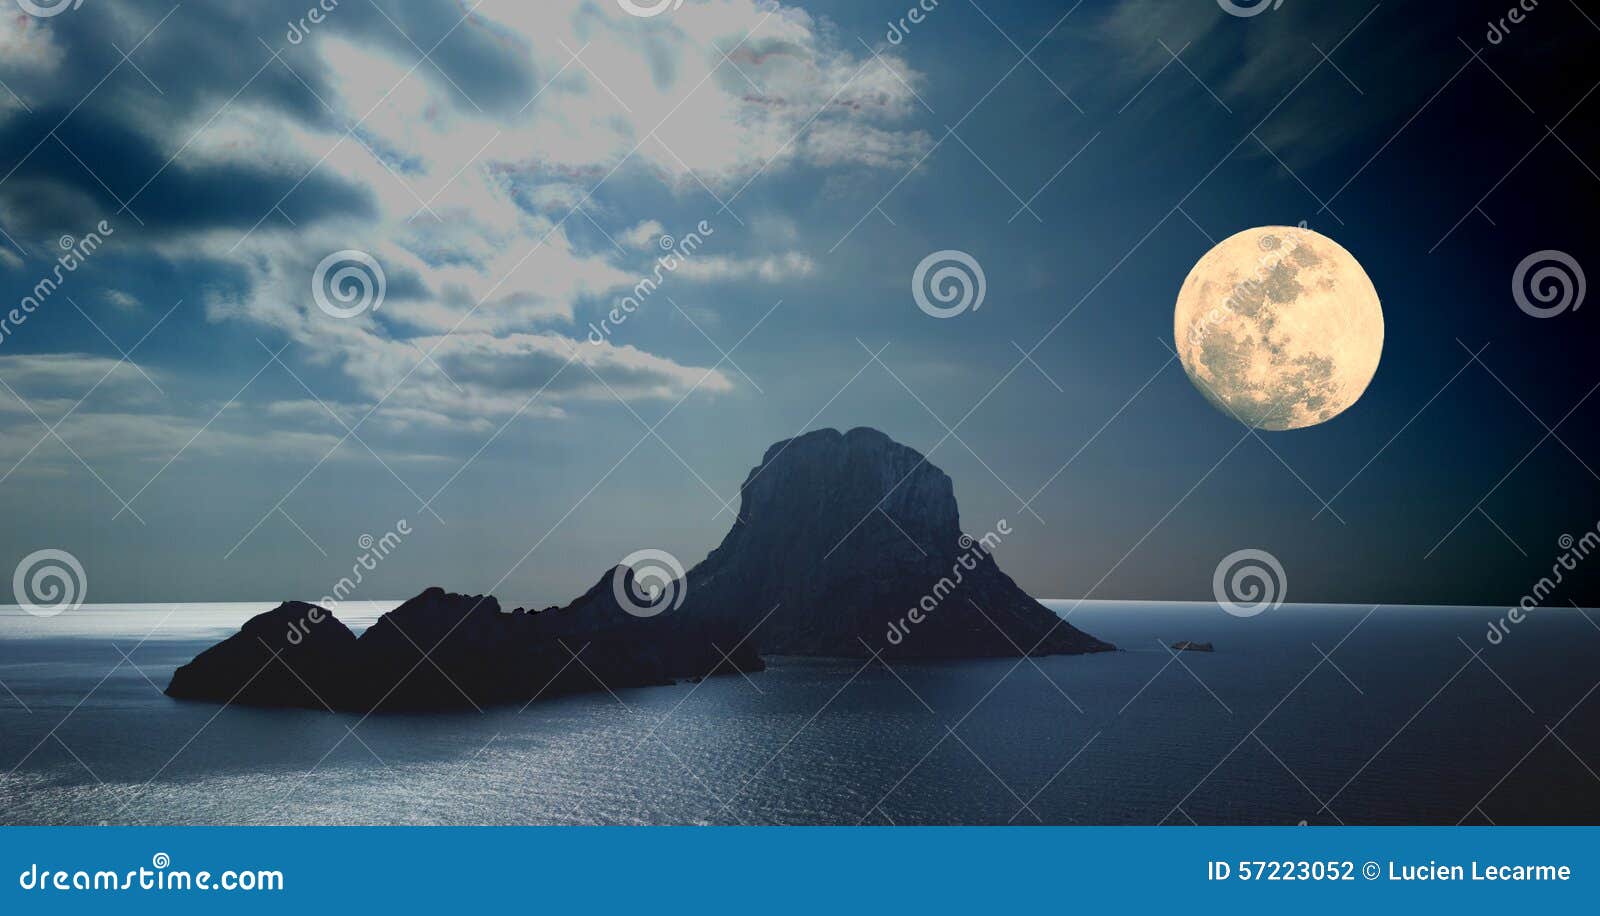 es vedra with full moon ibiza